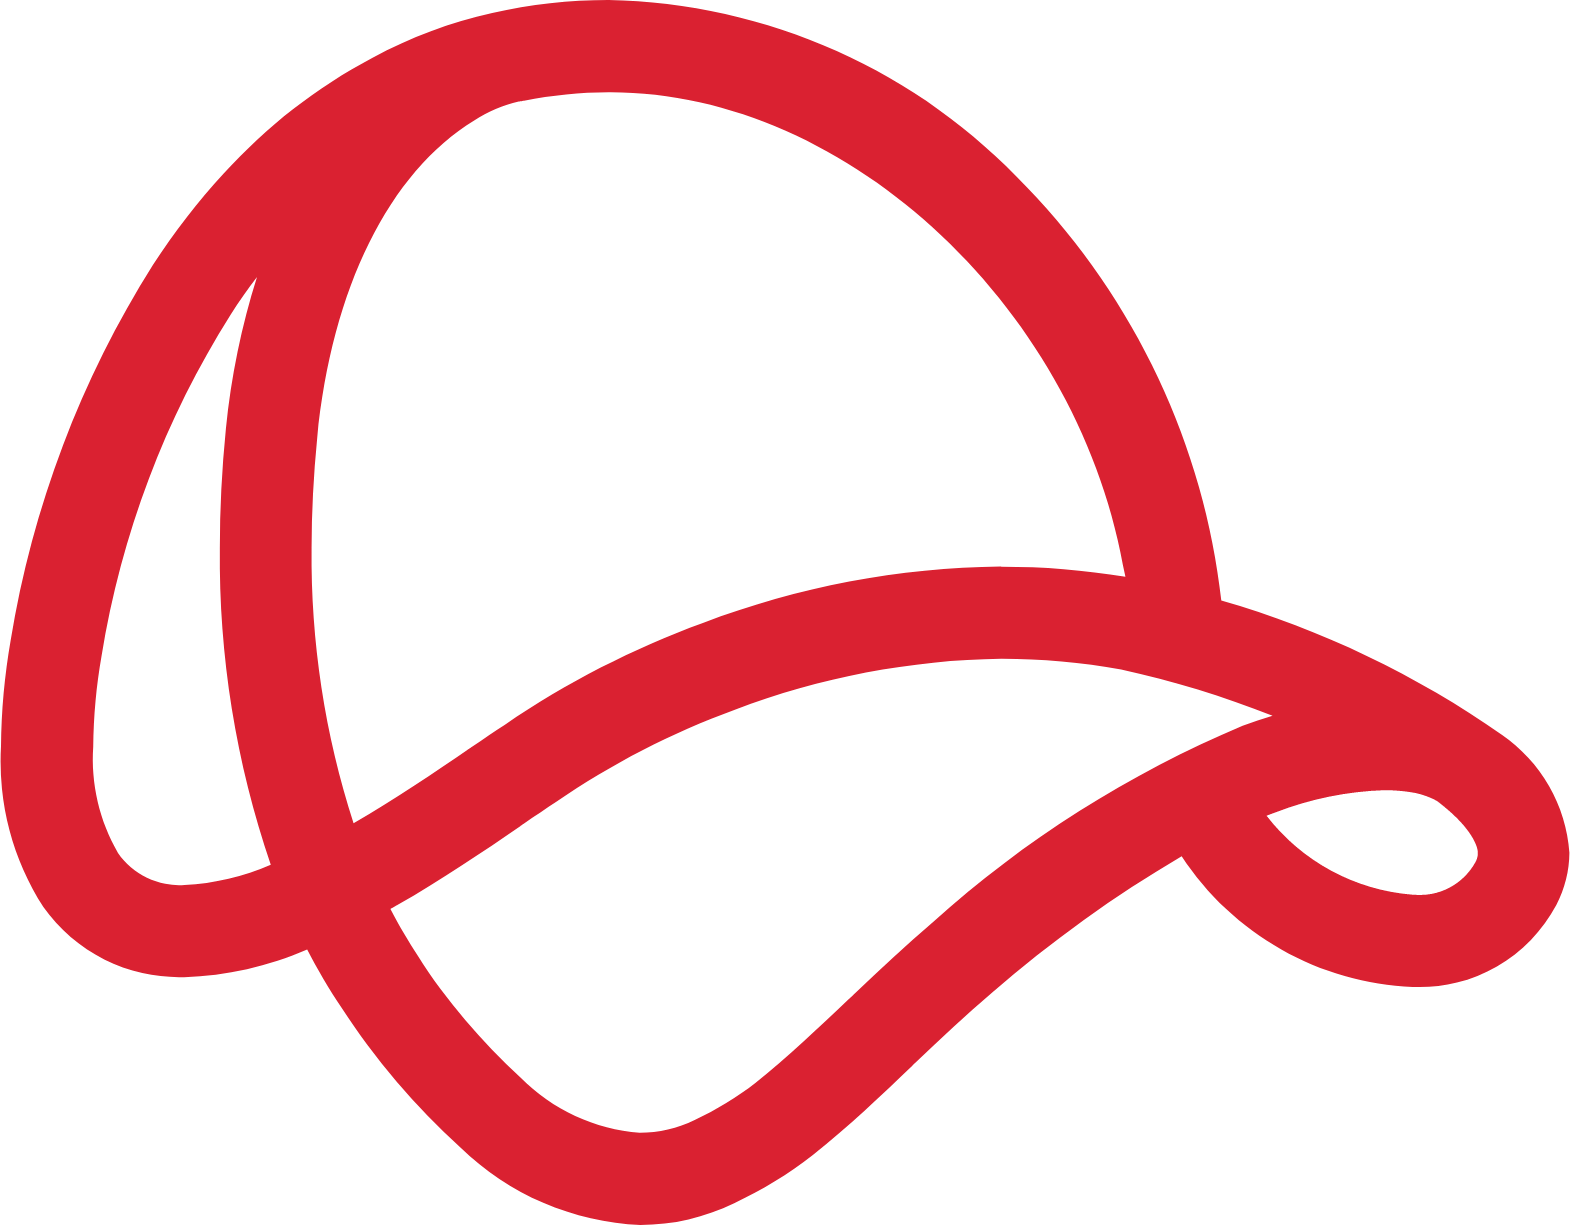 Mr Price Group logo (PNG transparent)